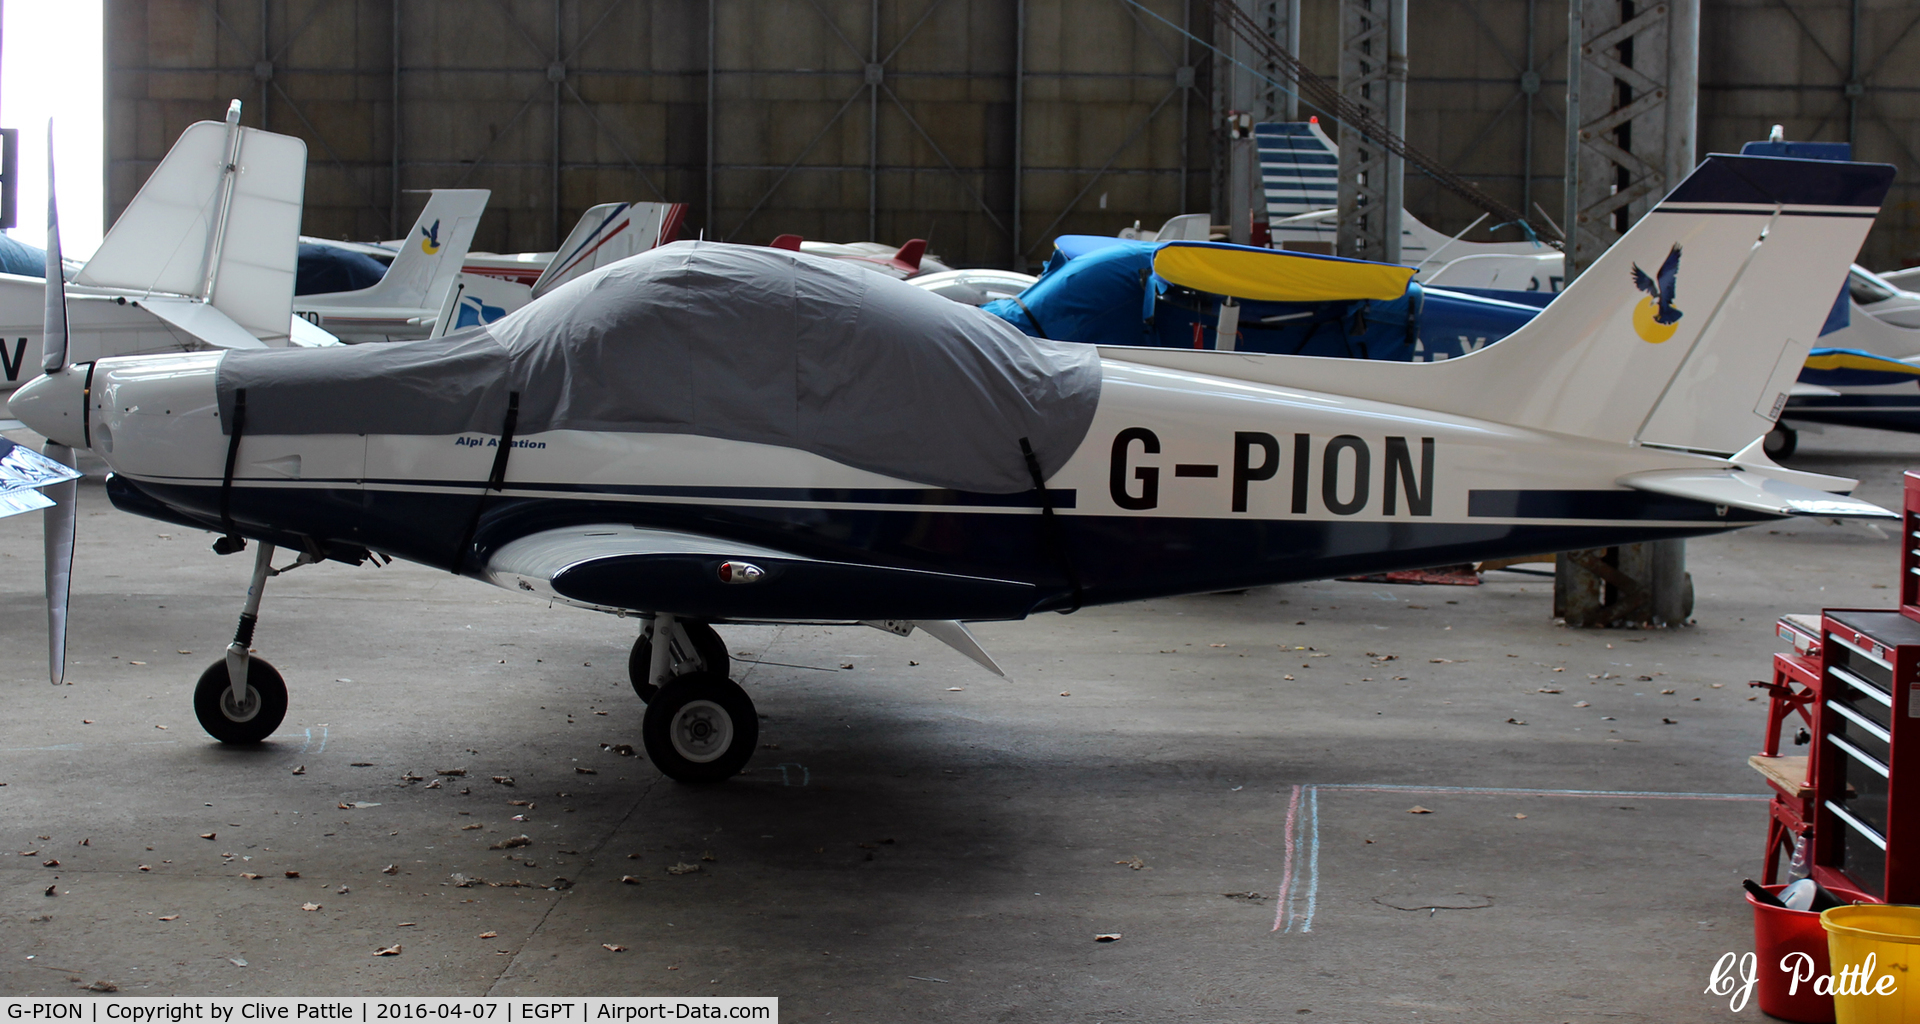 G-PION, 2005 Alpi Aviation Pioneer 300 C/N PFA 330-14294, Hangared at Perth EGPT